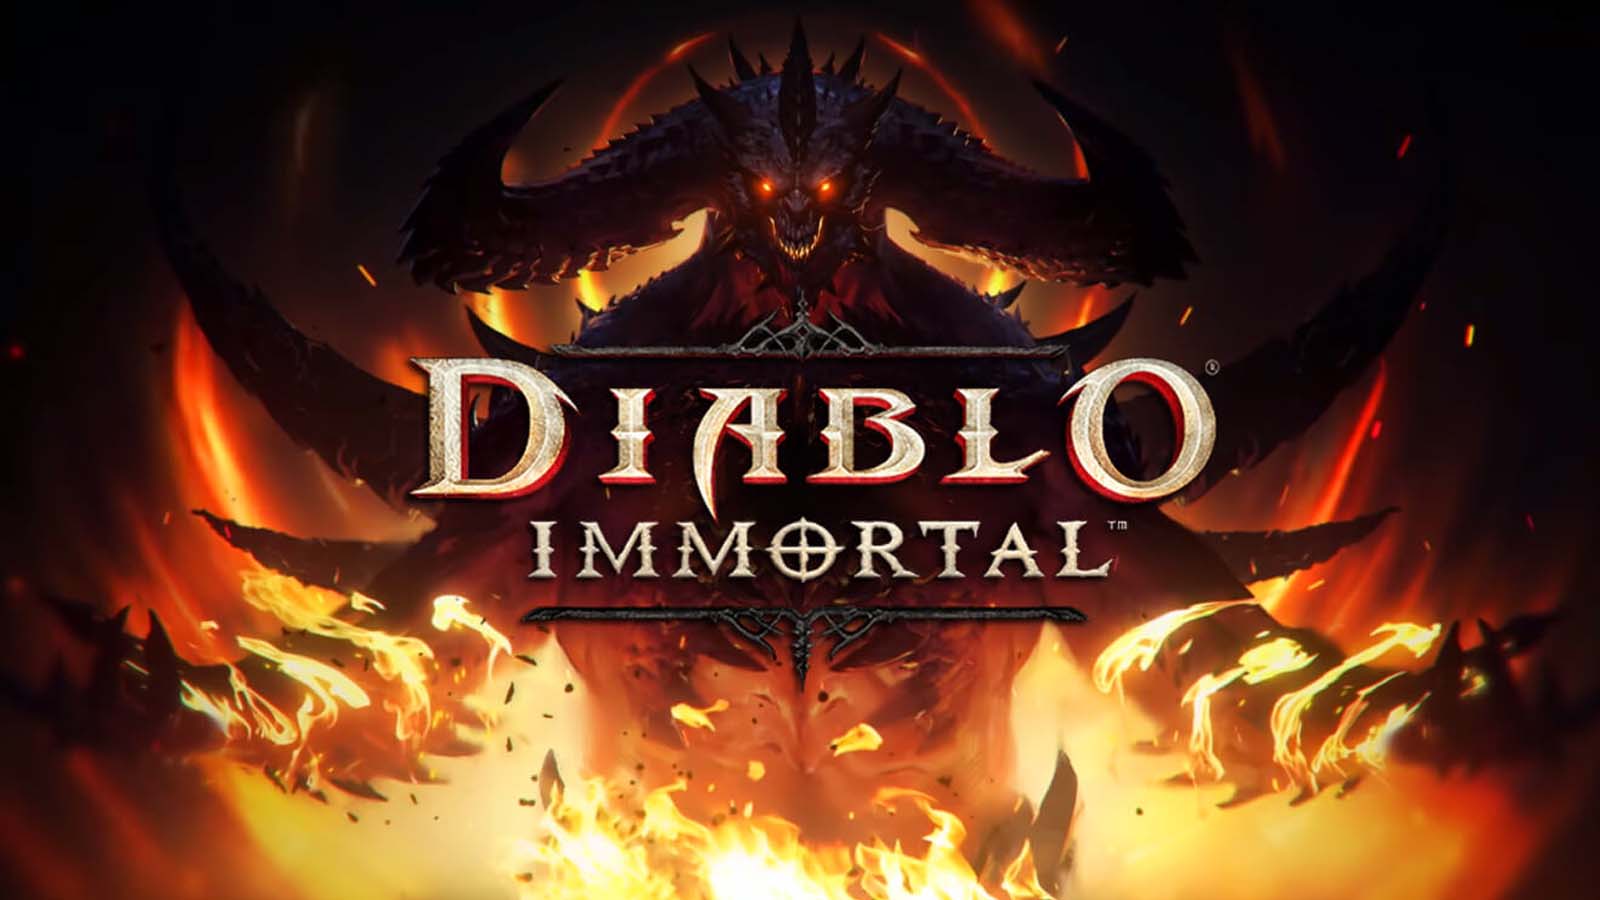 iphone diablo immortal release date